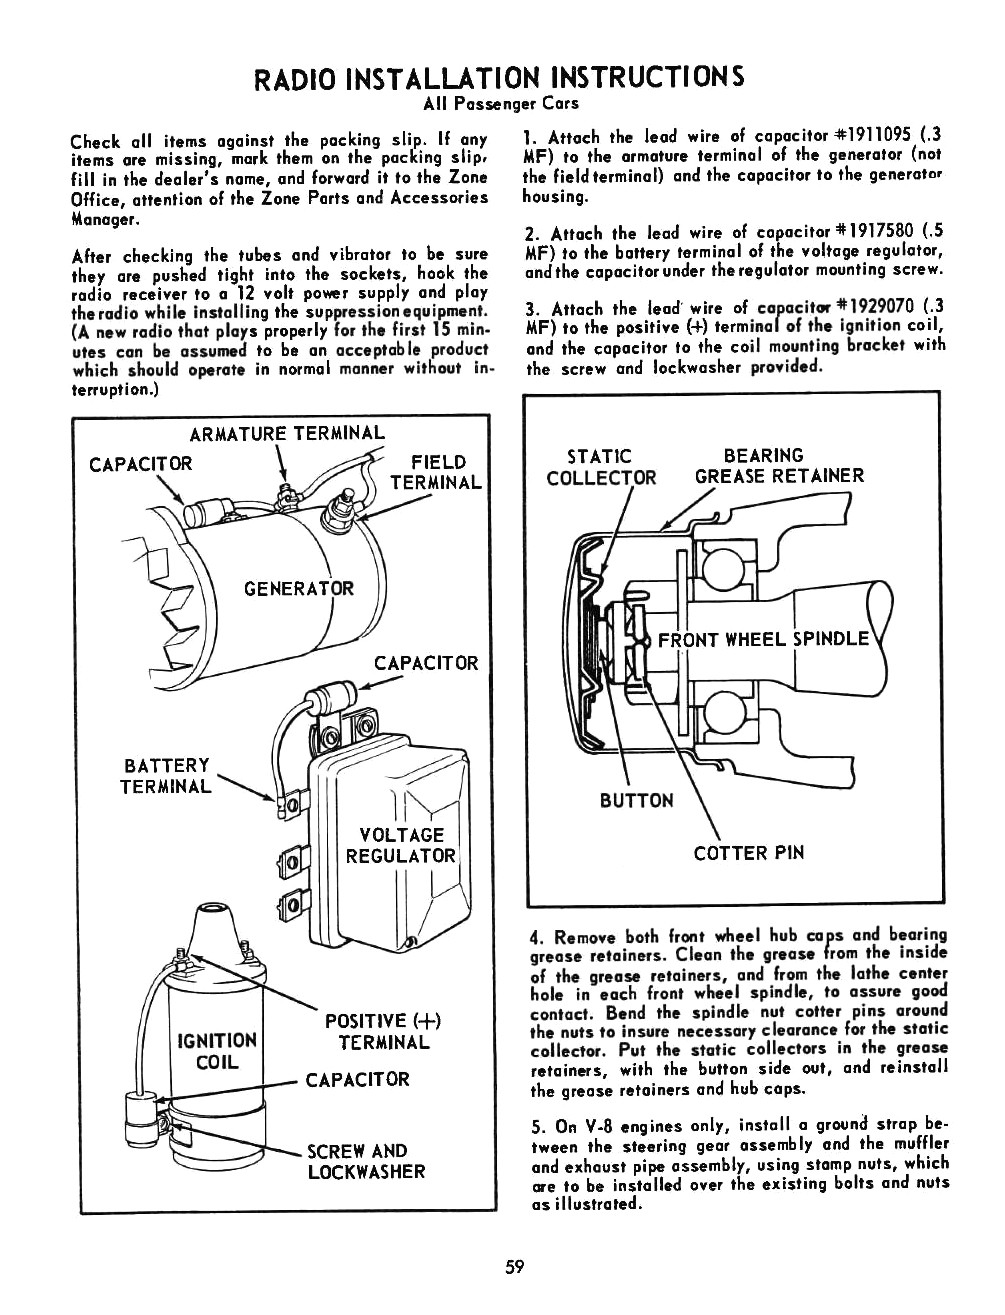 1955_Chevrolet_Acc_Manual-59